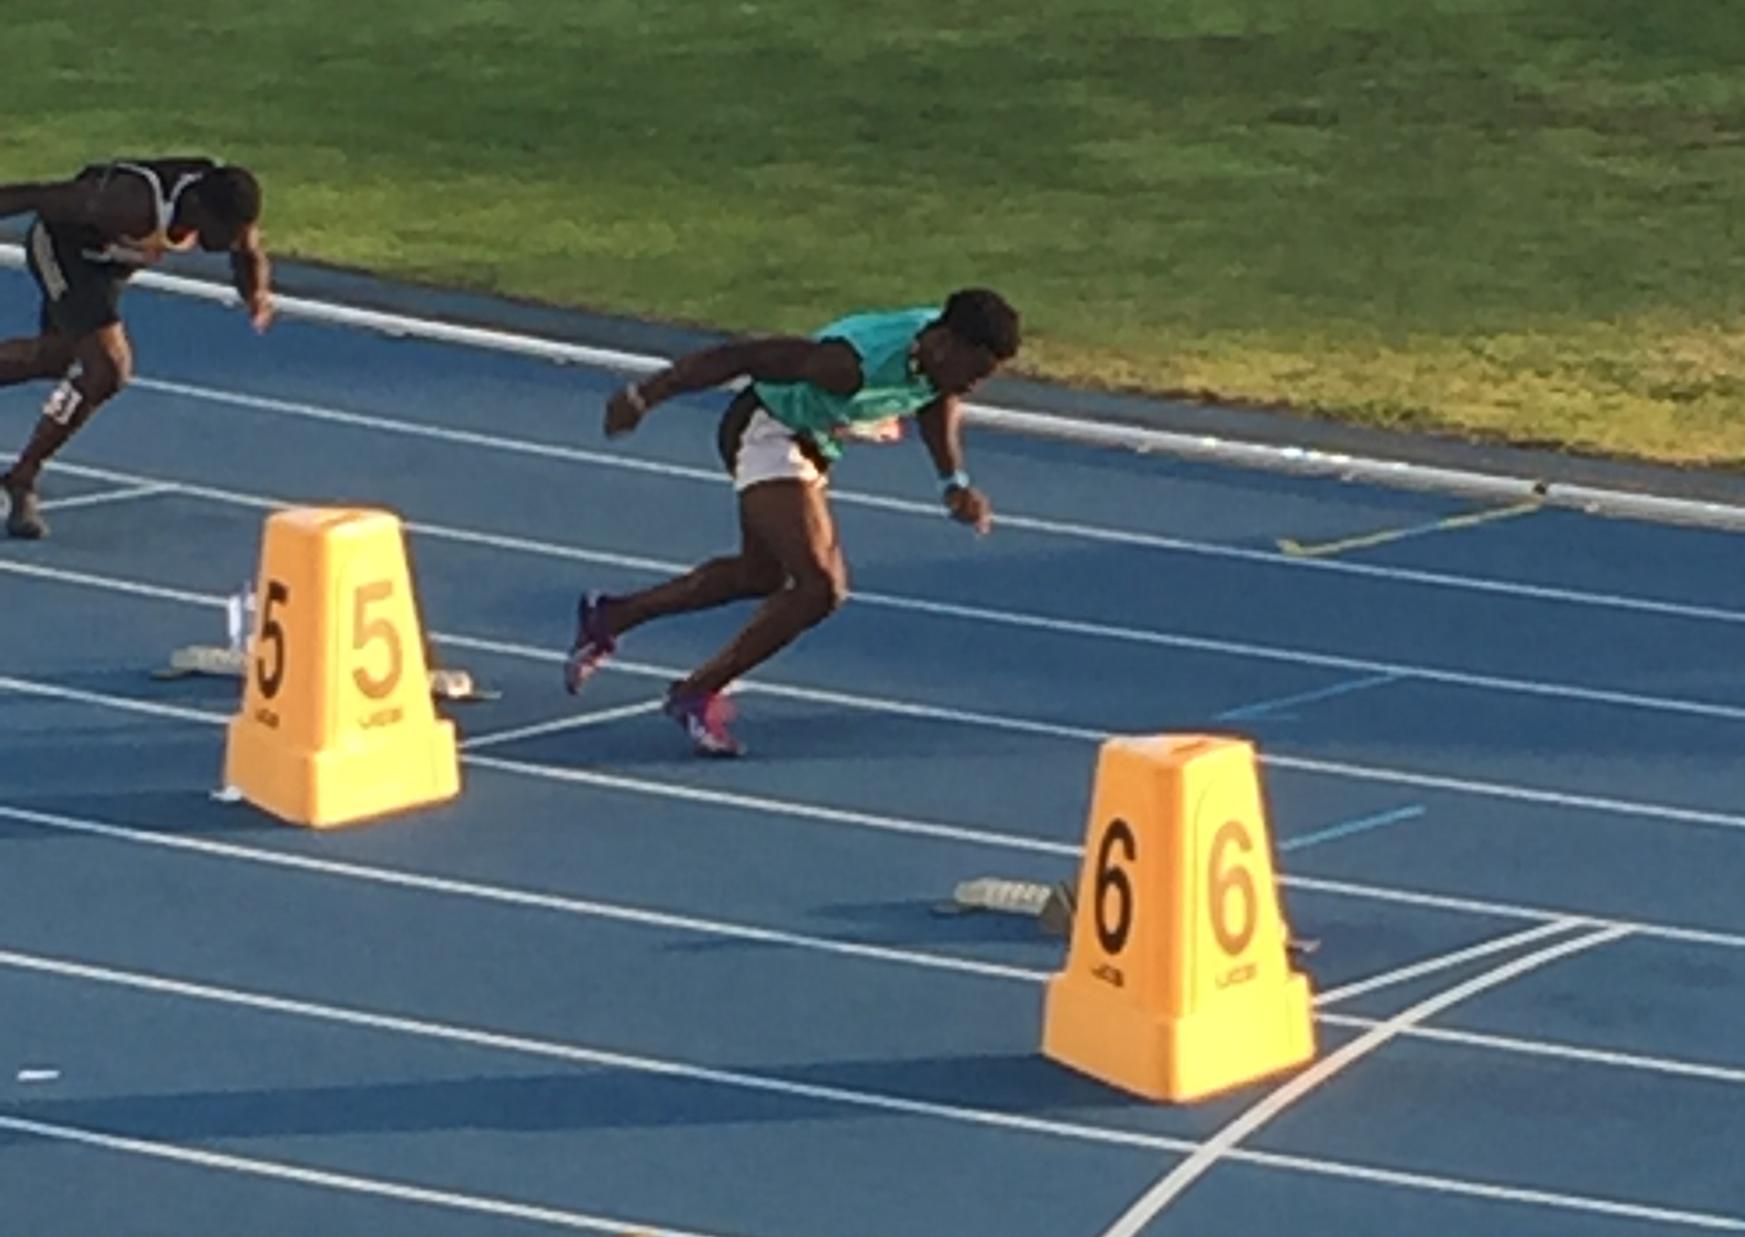 Snead shines at Bahamas Olympic Trials